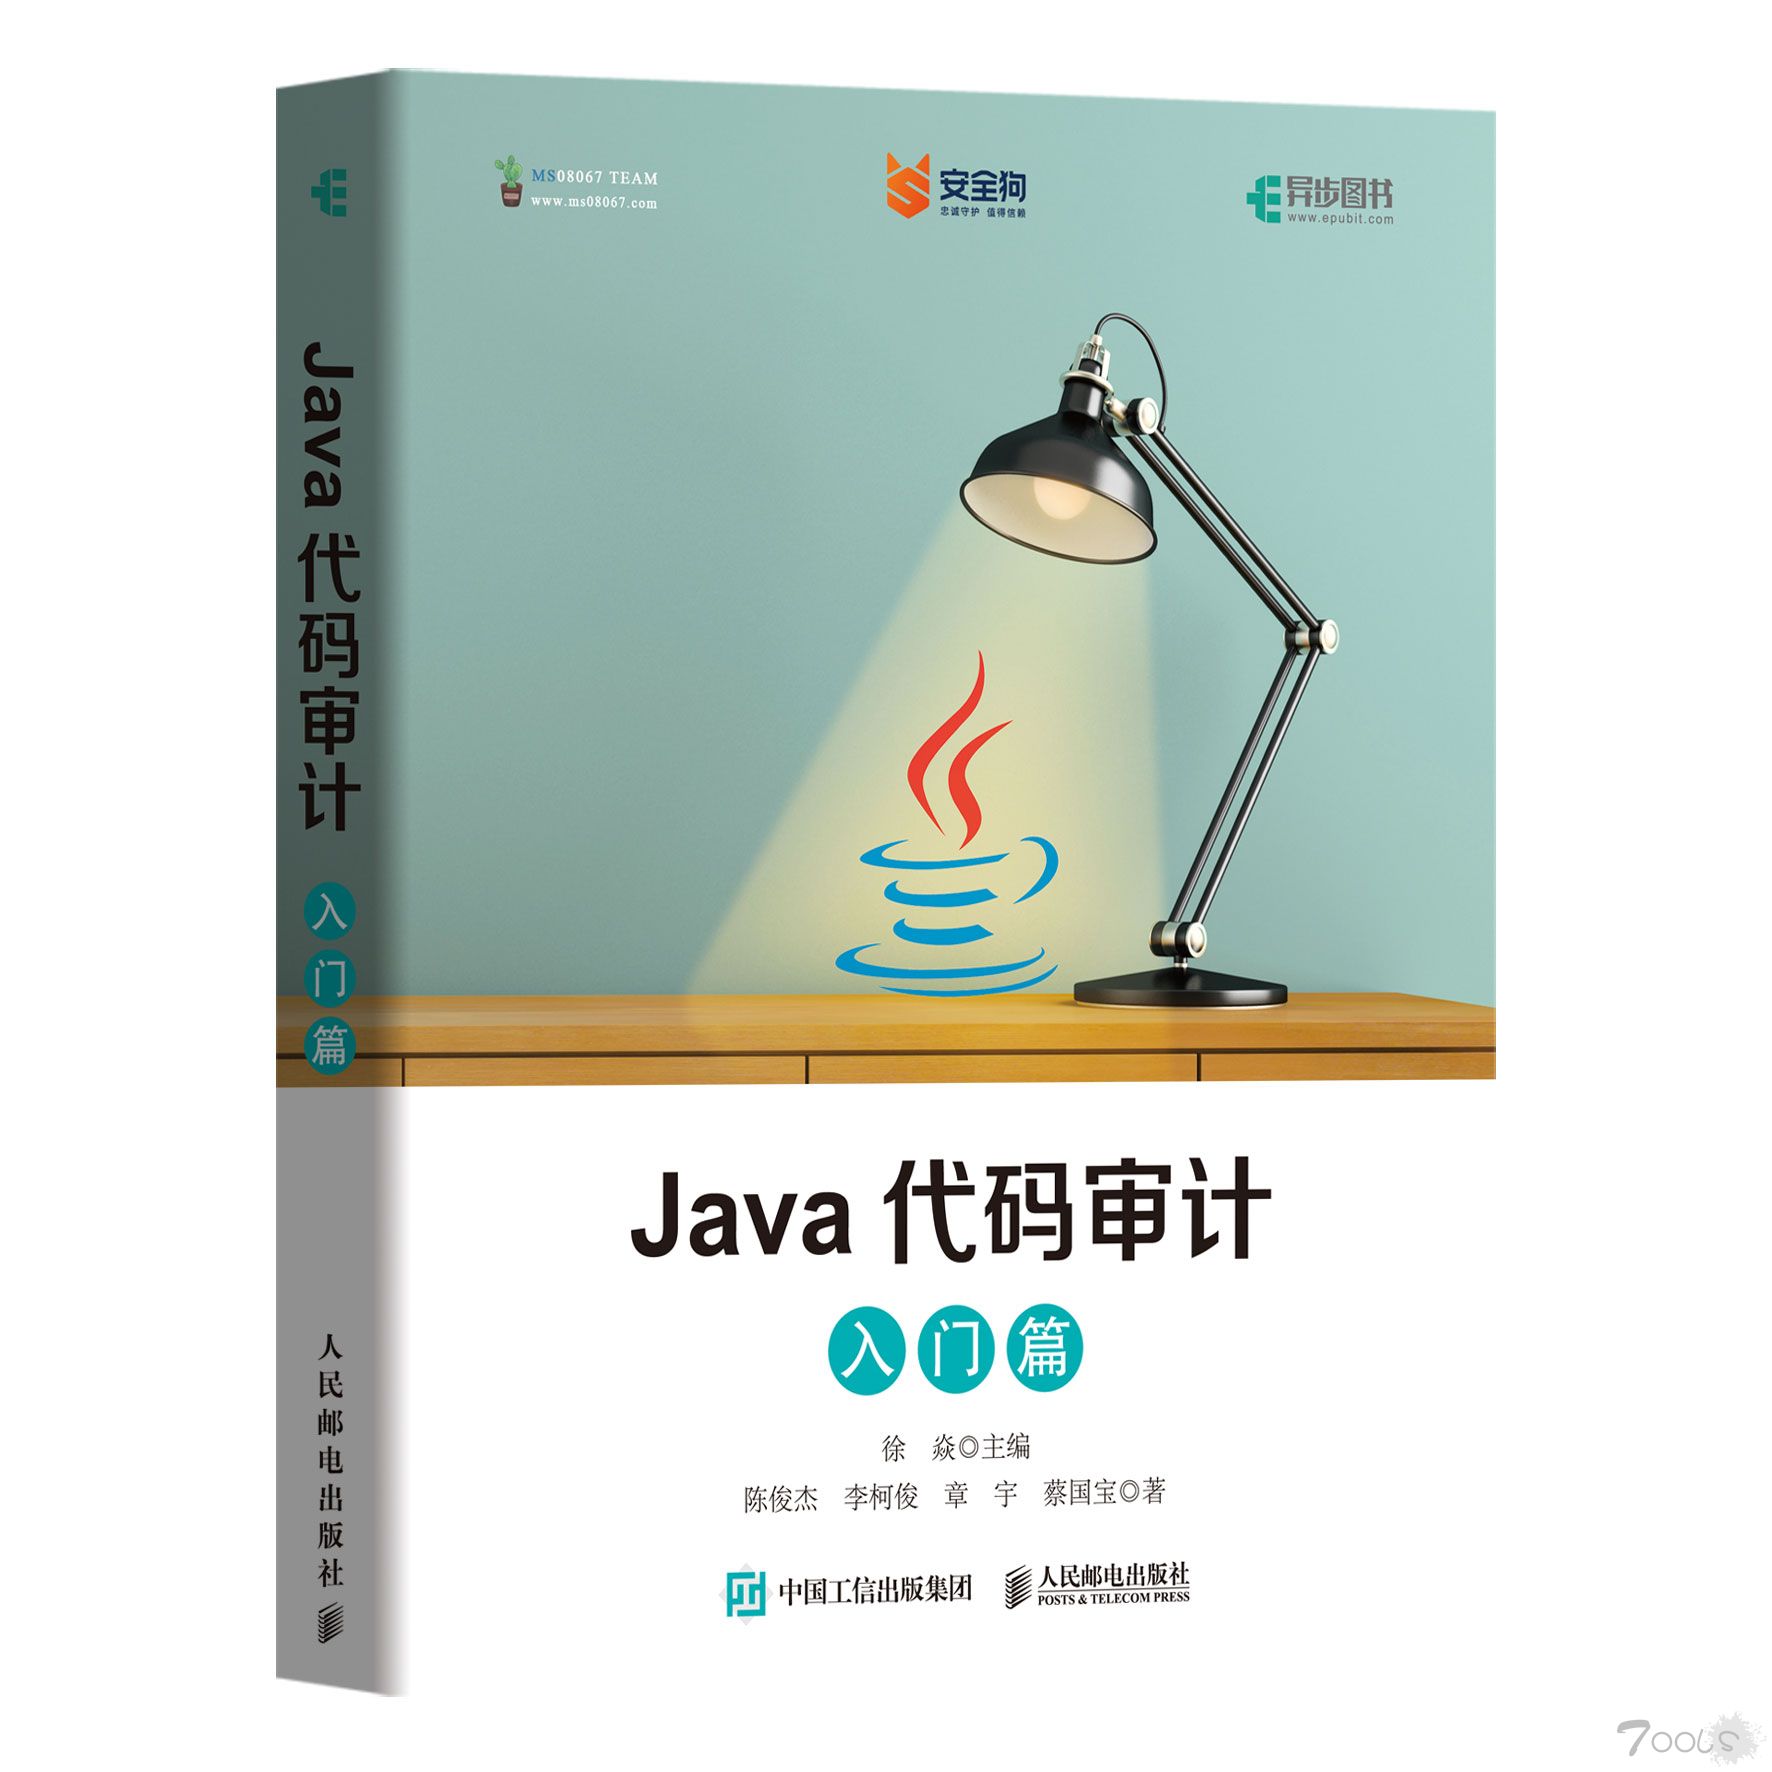 T00ls联合《Java代码审计》作者开展发表Java相关文章赠书活动